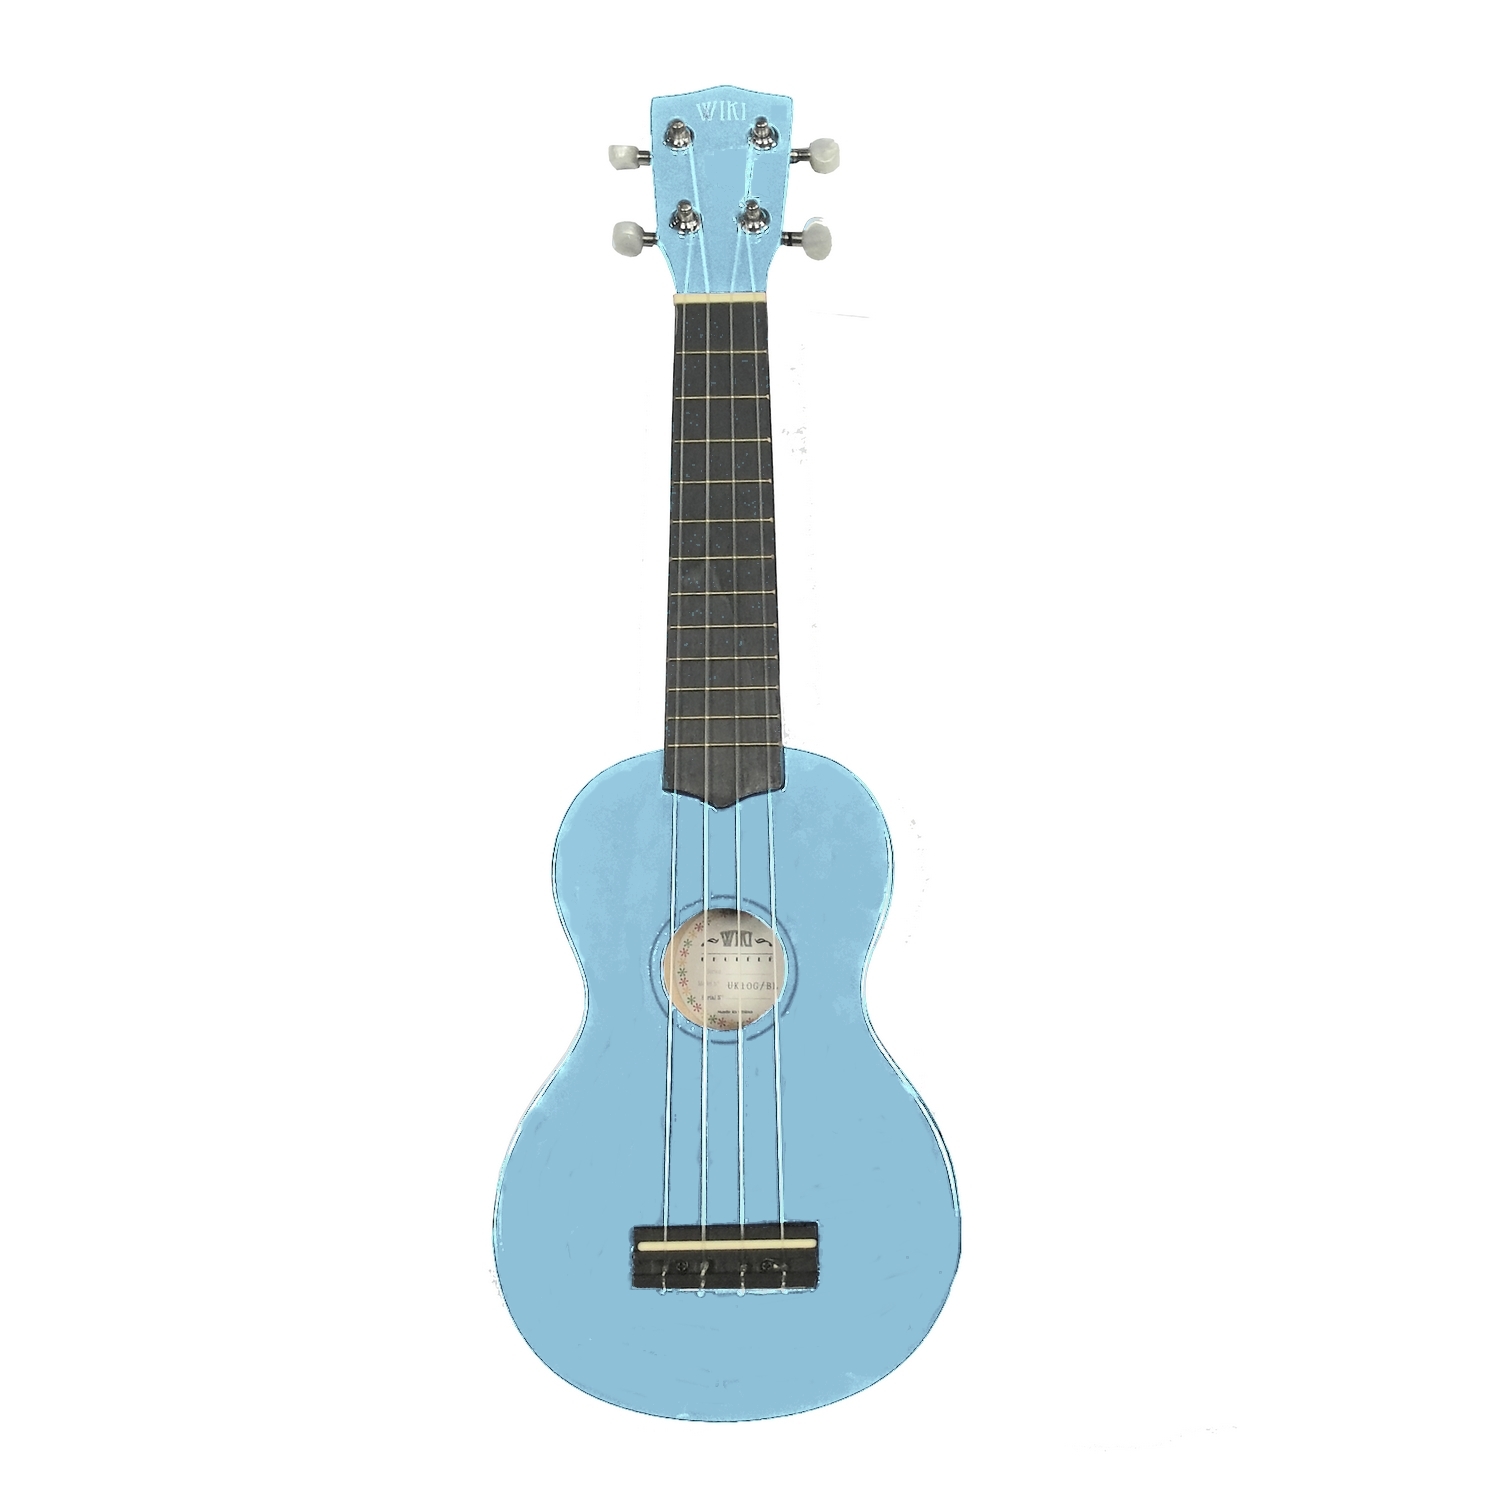 WIKI UK10G BBL -  гитара укулеле сопрано, клен, цвет синий глянец, чехол в комплекте